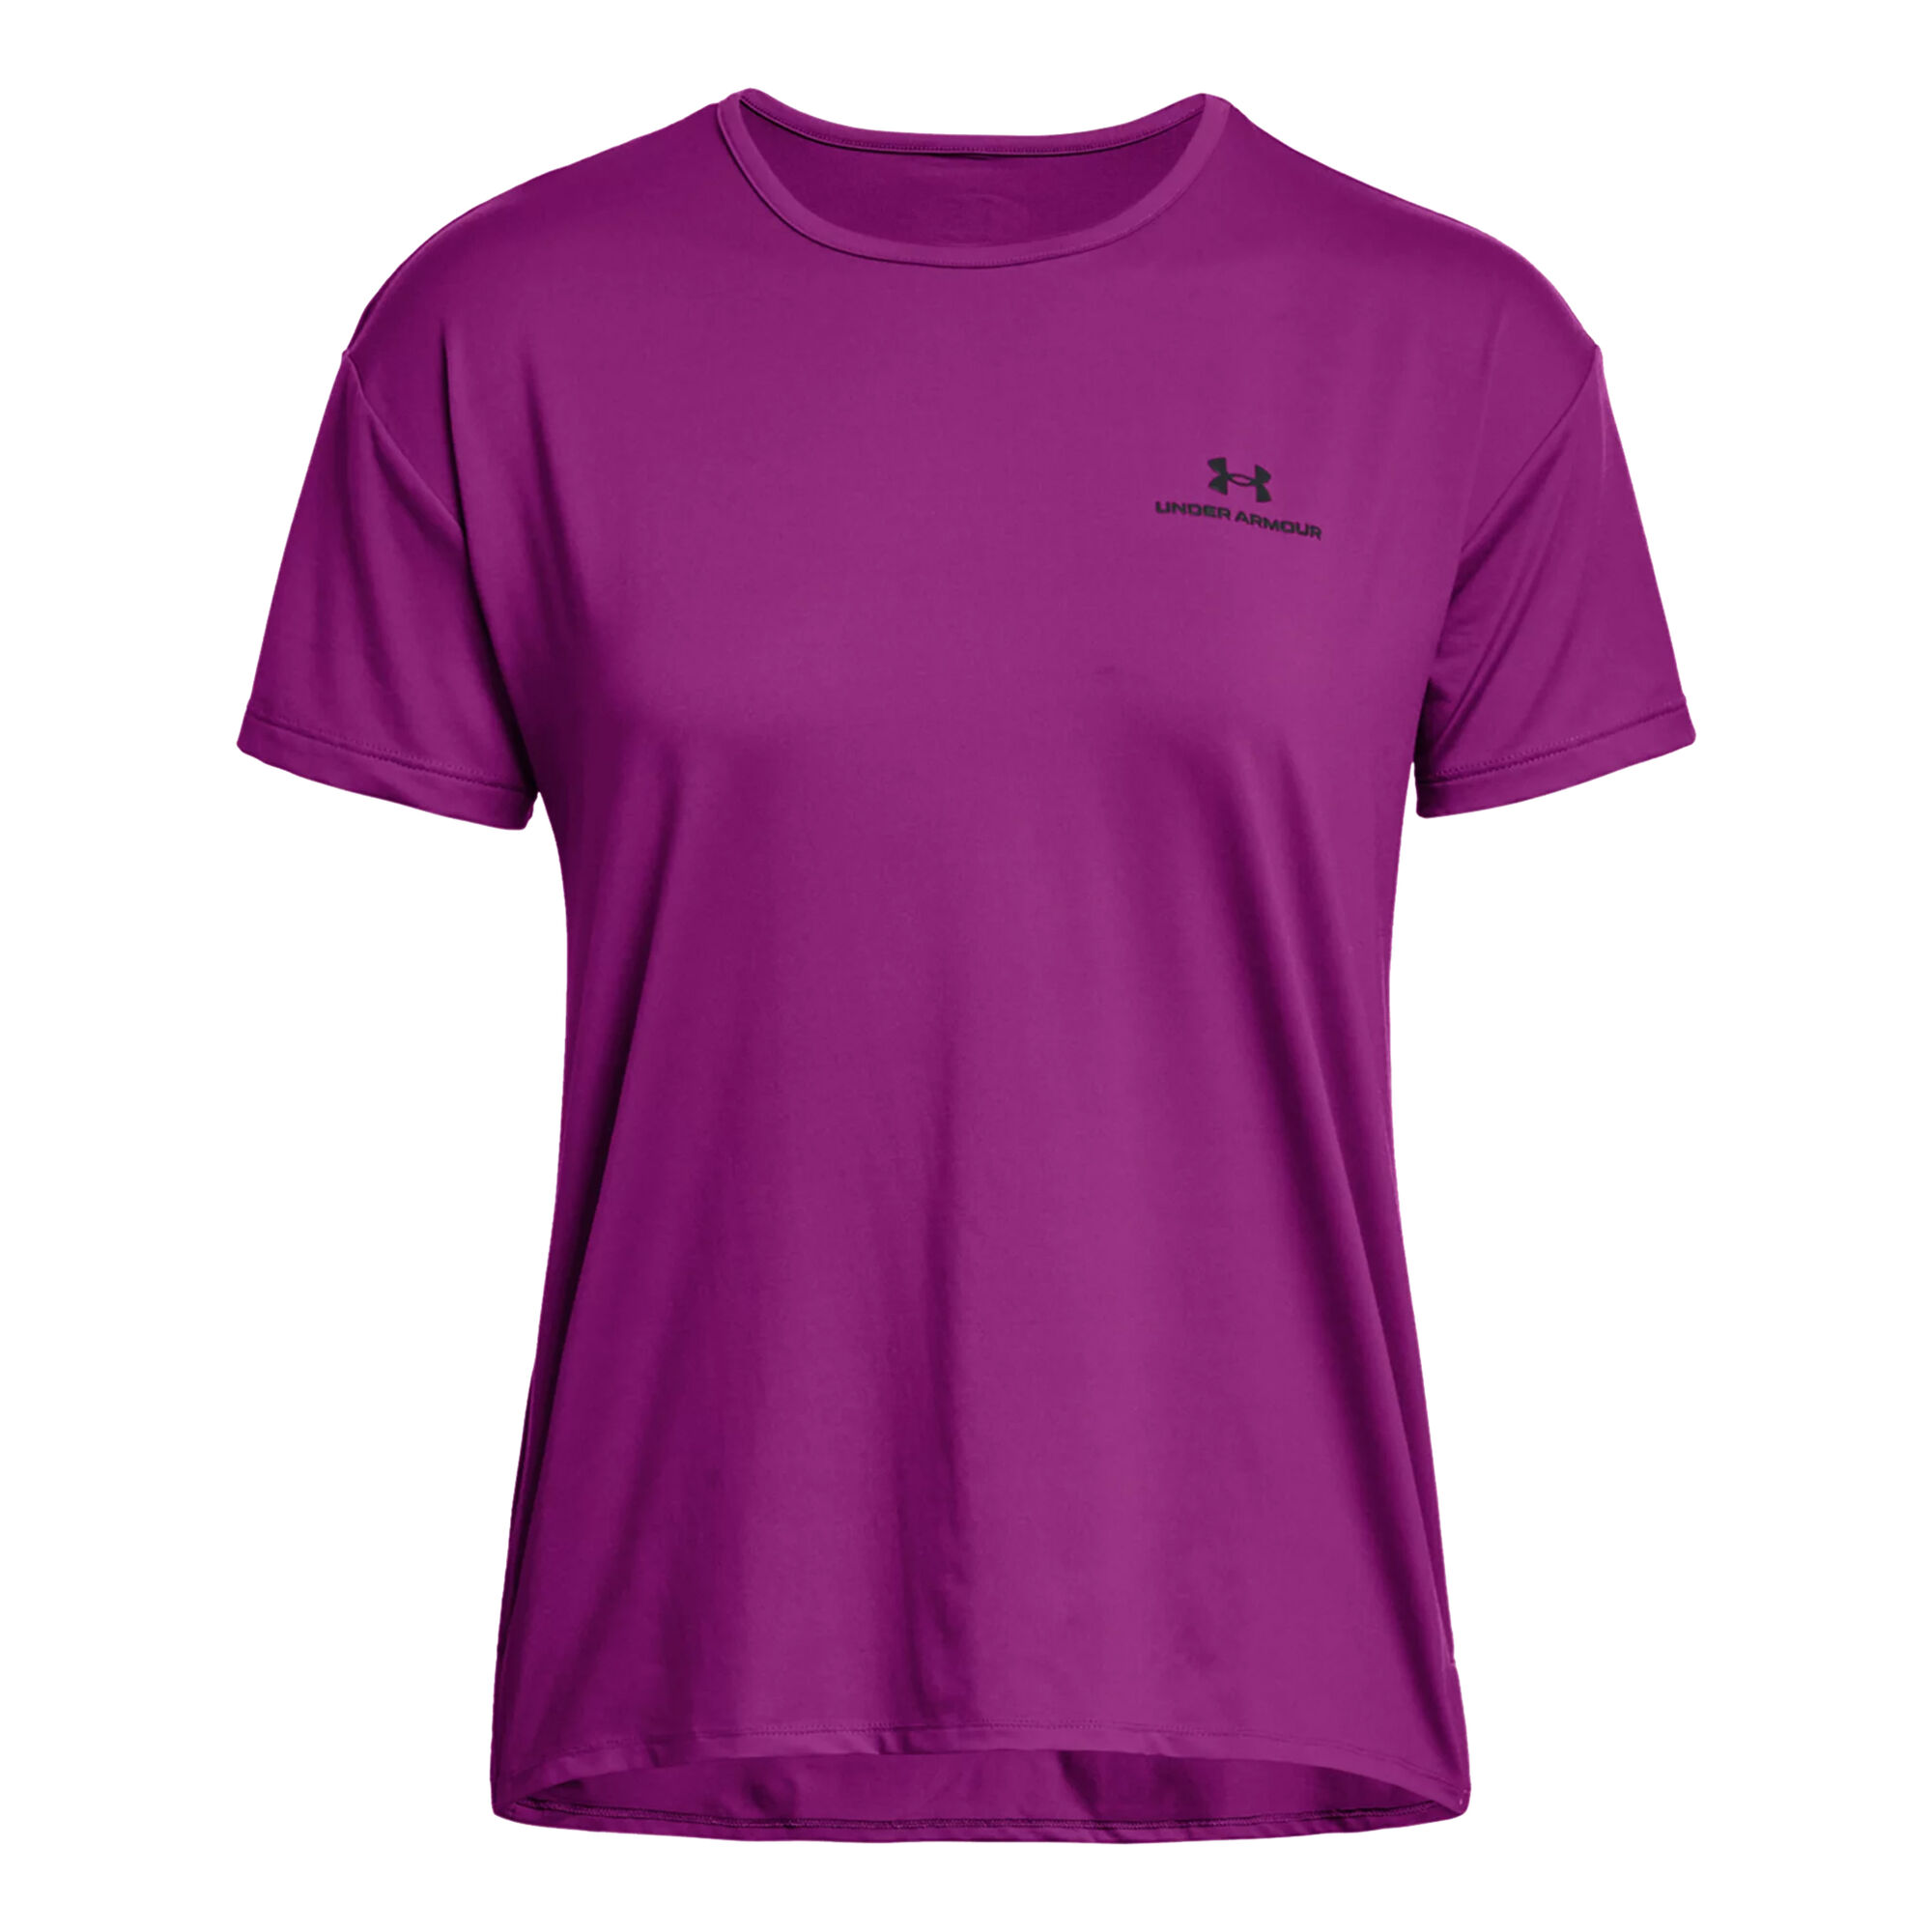 Buy Under Armour Rush Energy 2.0 T-Shirt Women Violet online